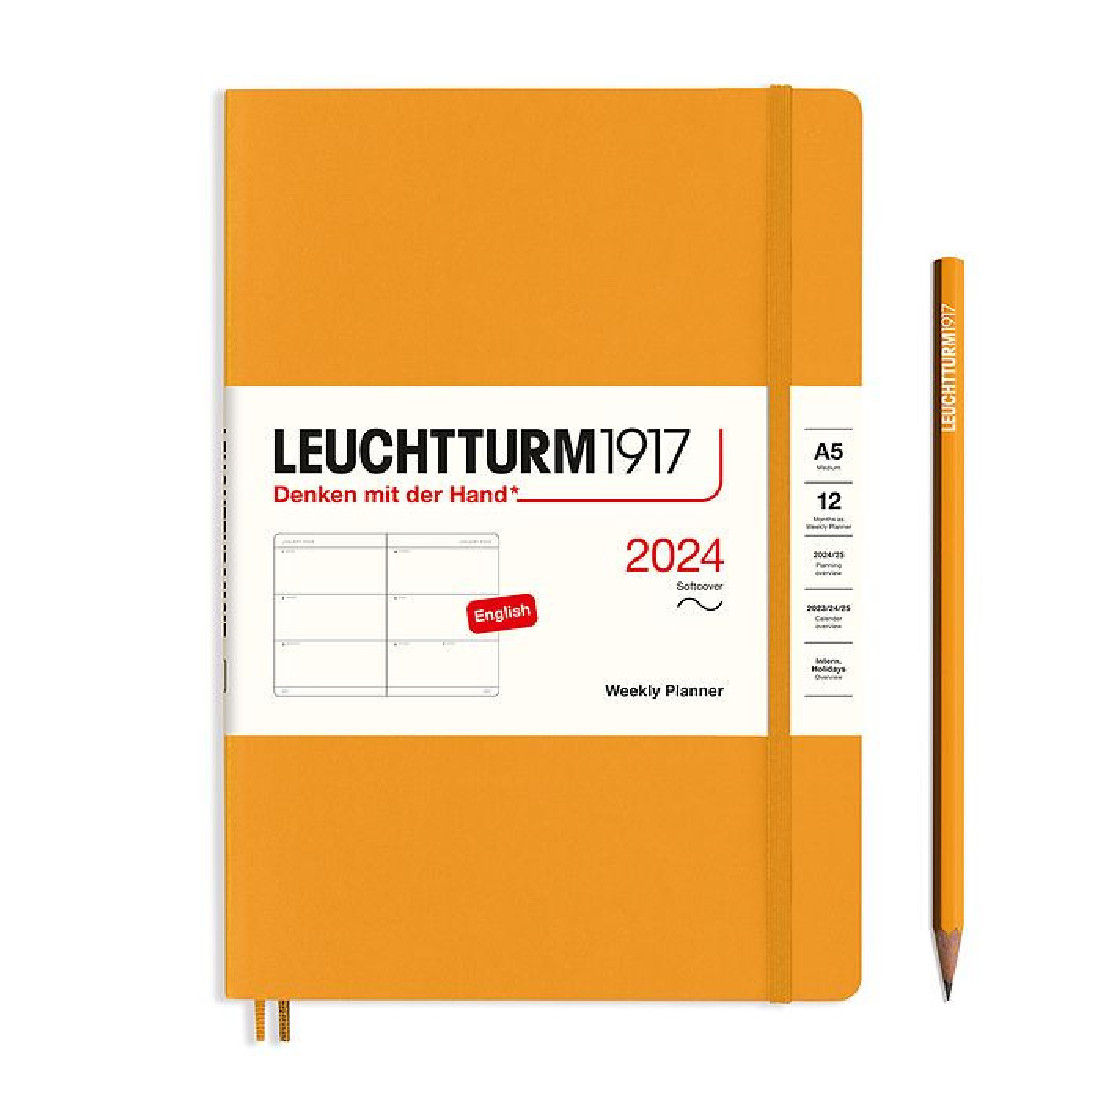 Leuchtturm 1917 Weekly Planner and Notebook 2024 Mint Green Medium A5 Soft  Cover